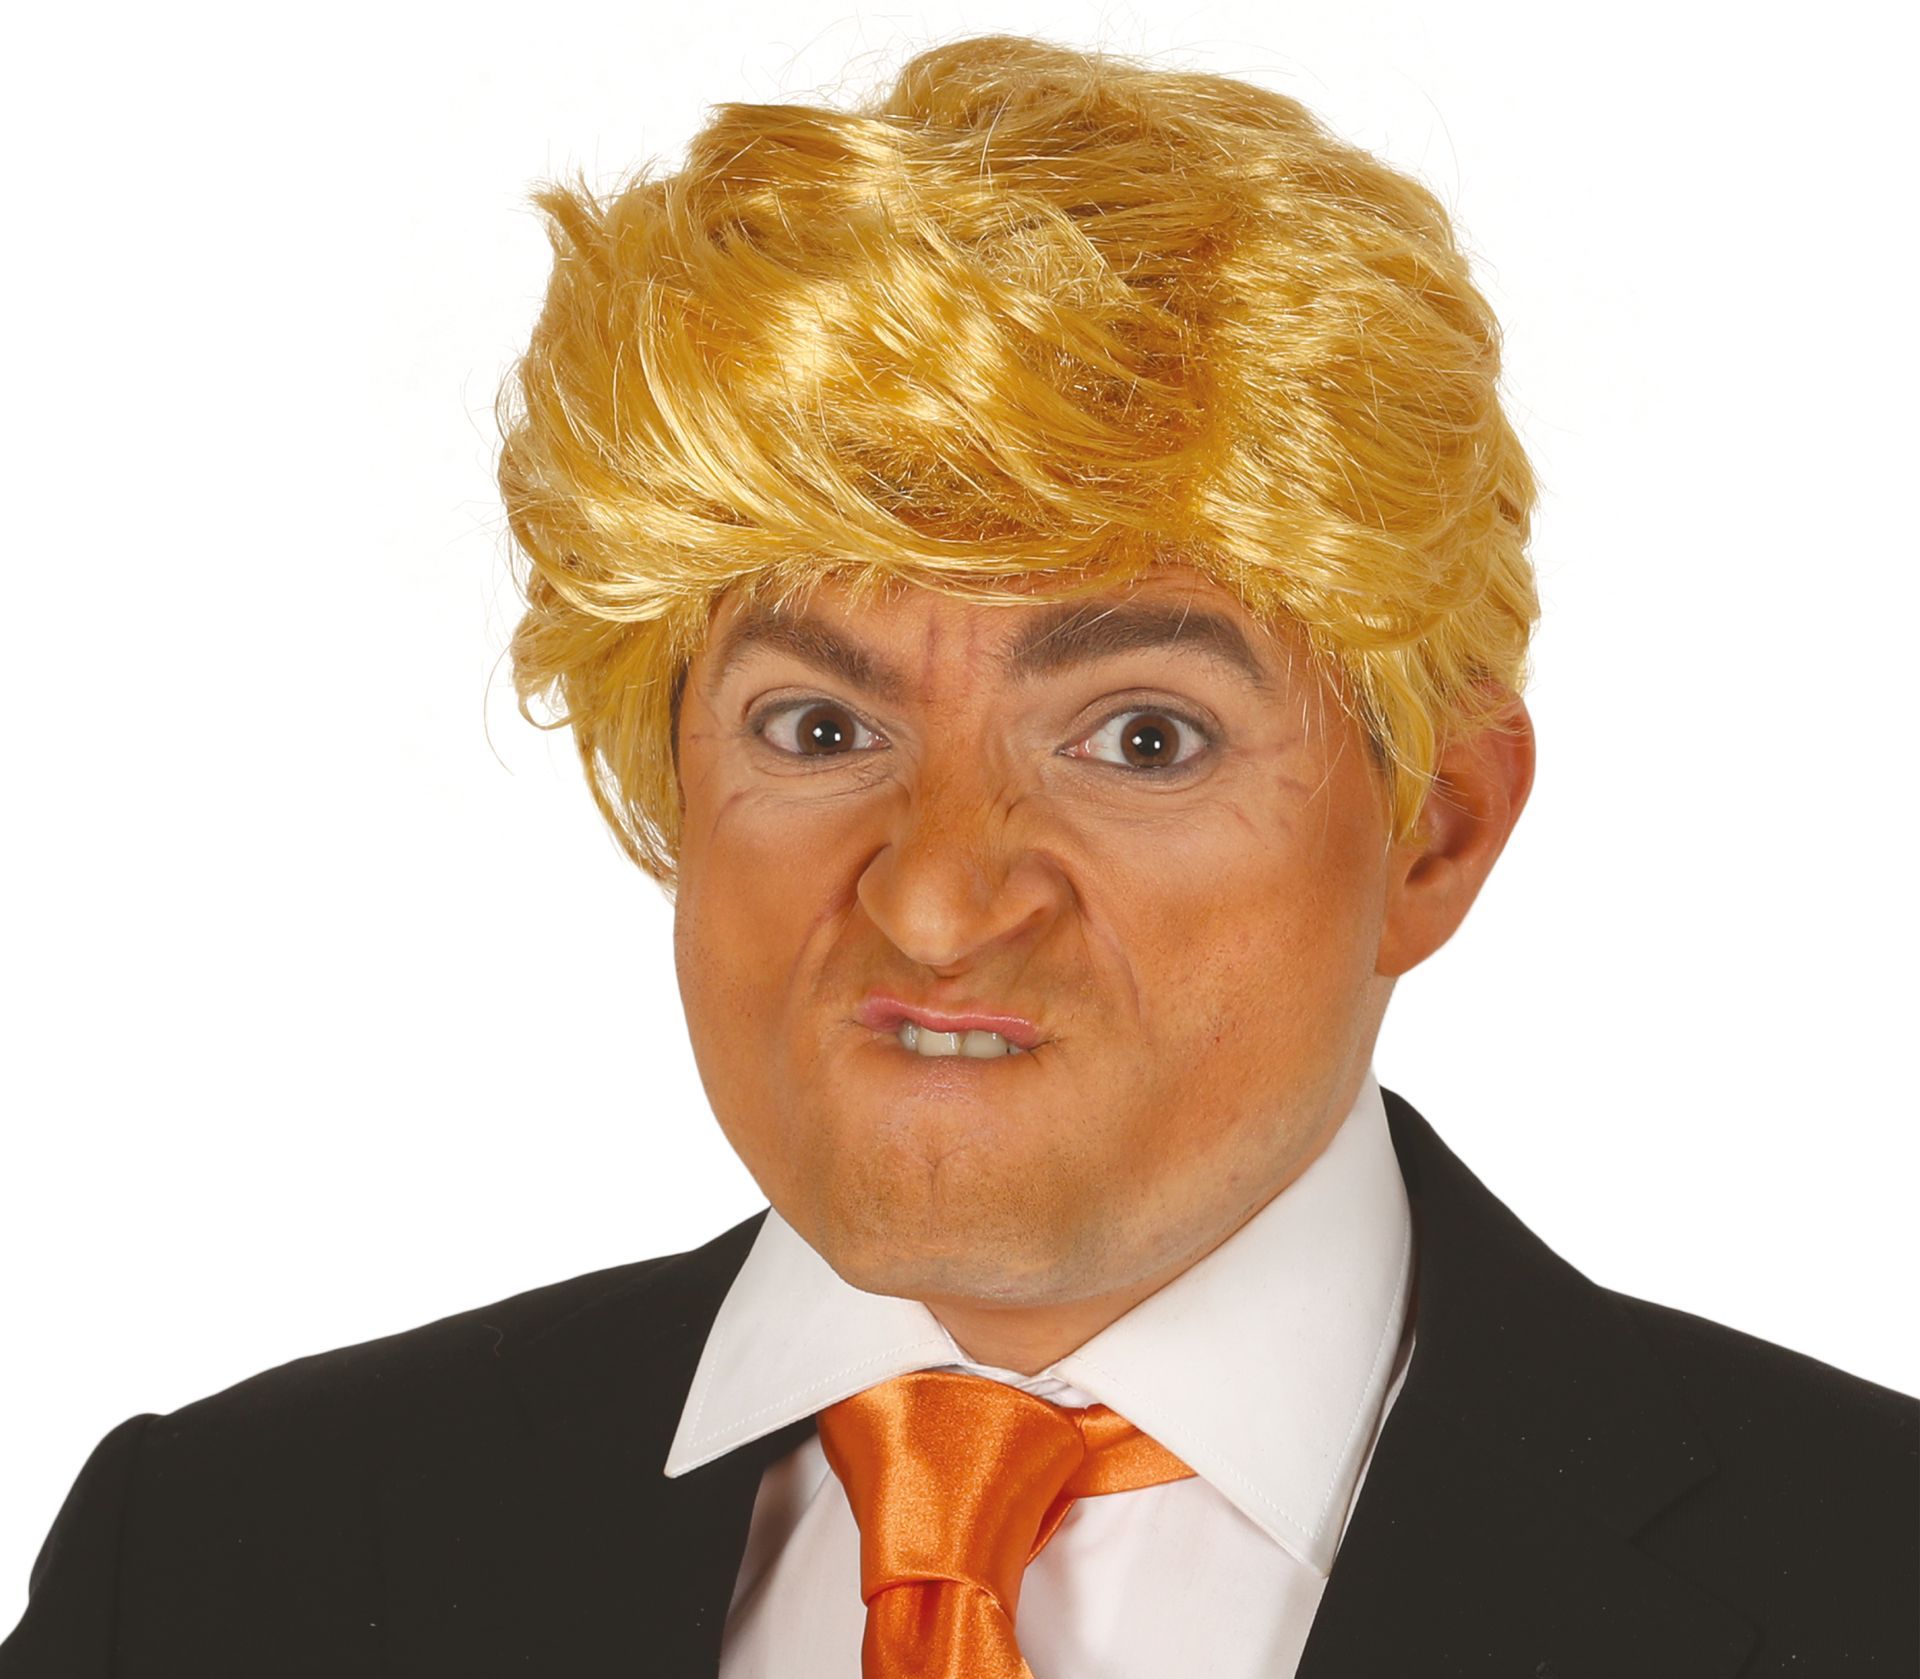 Donald Trump blonde pruik